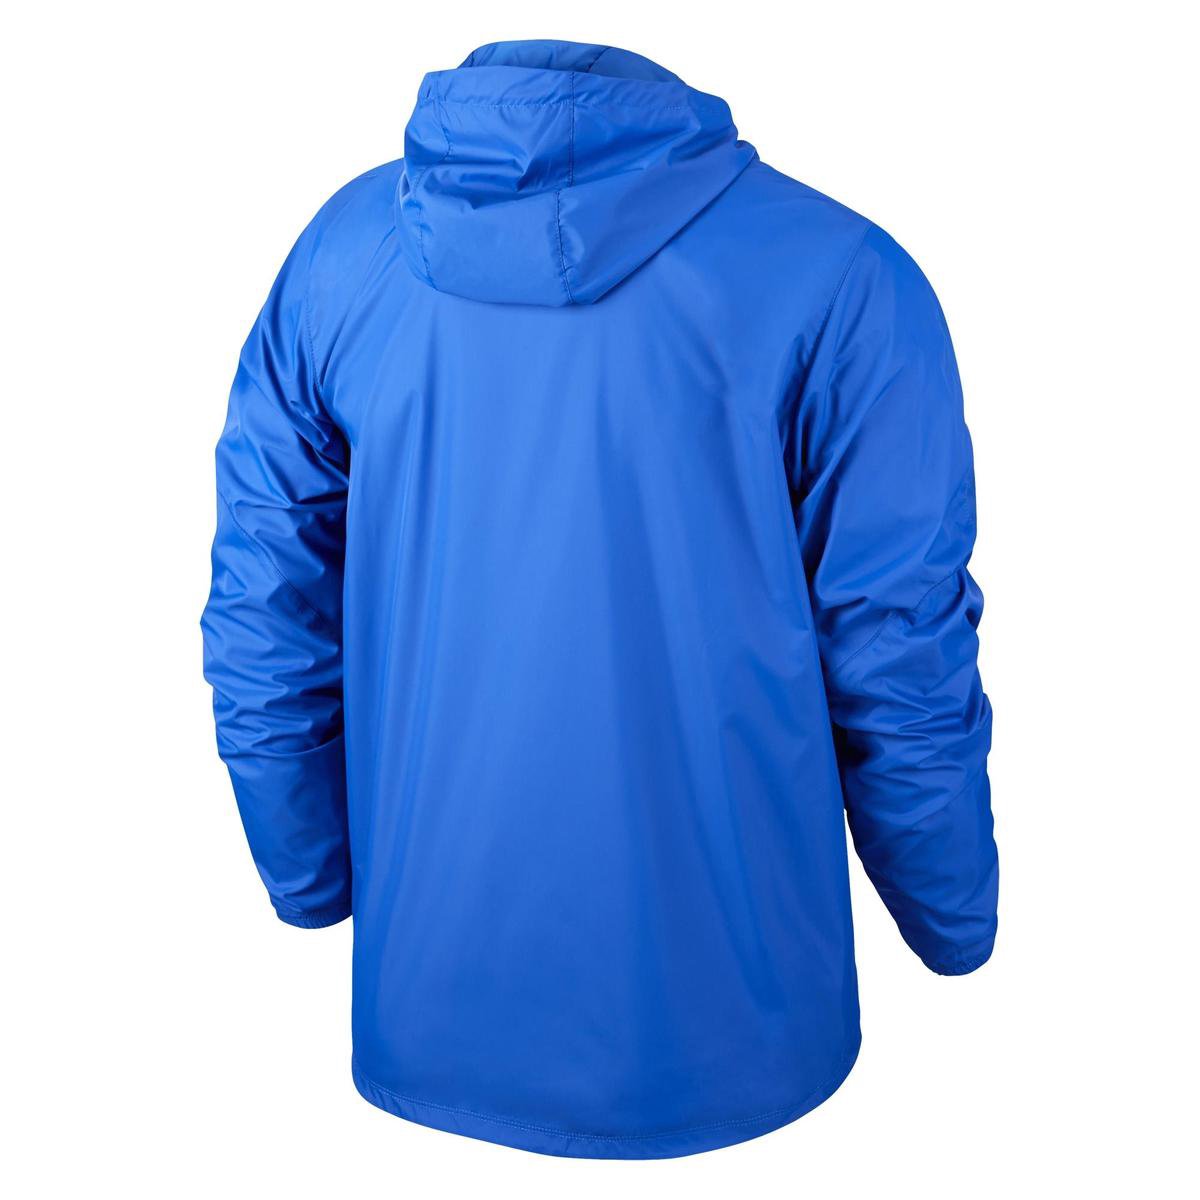 Nike Rain Jacket Regenjas - Maat 140 - Unisex - blauw Maat M -140/152 bol.com